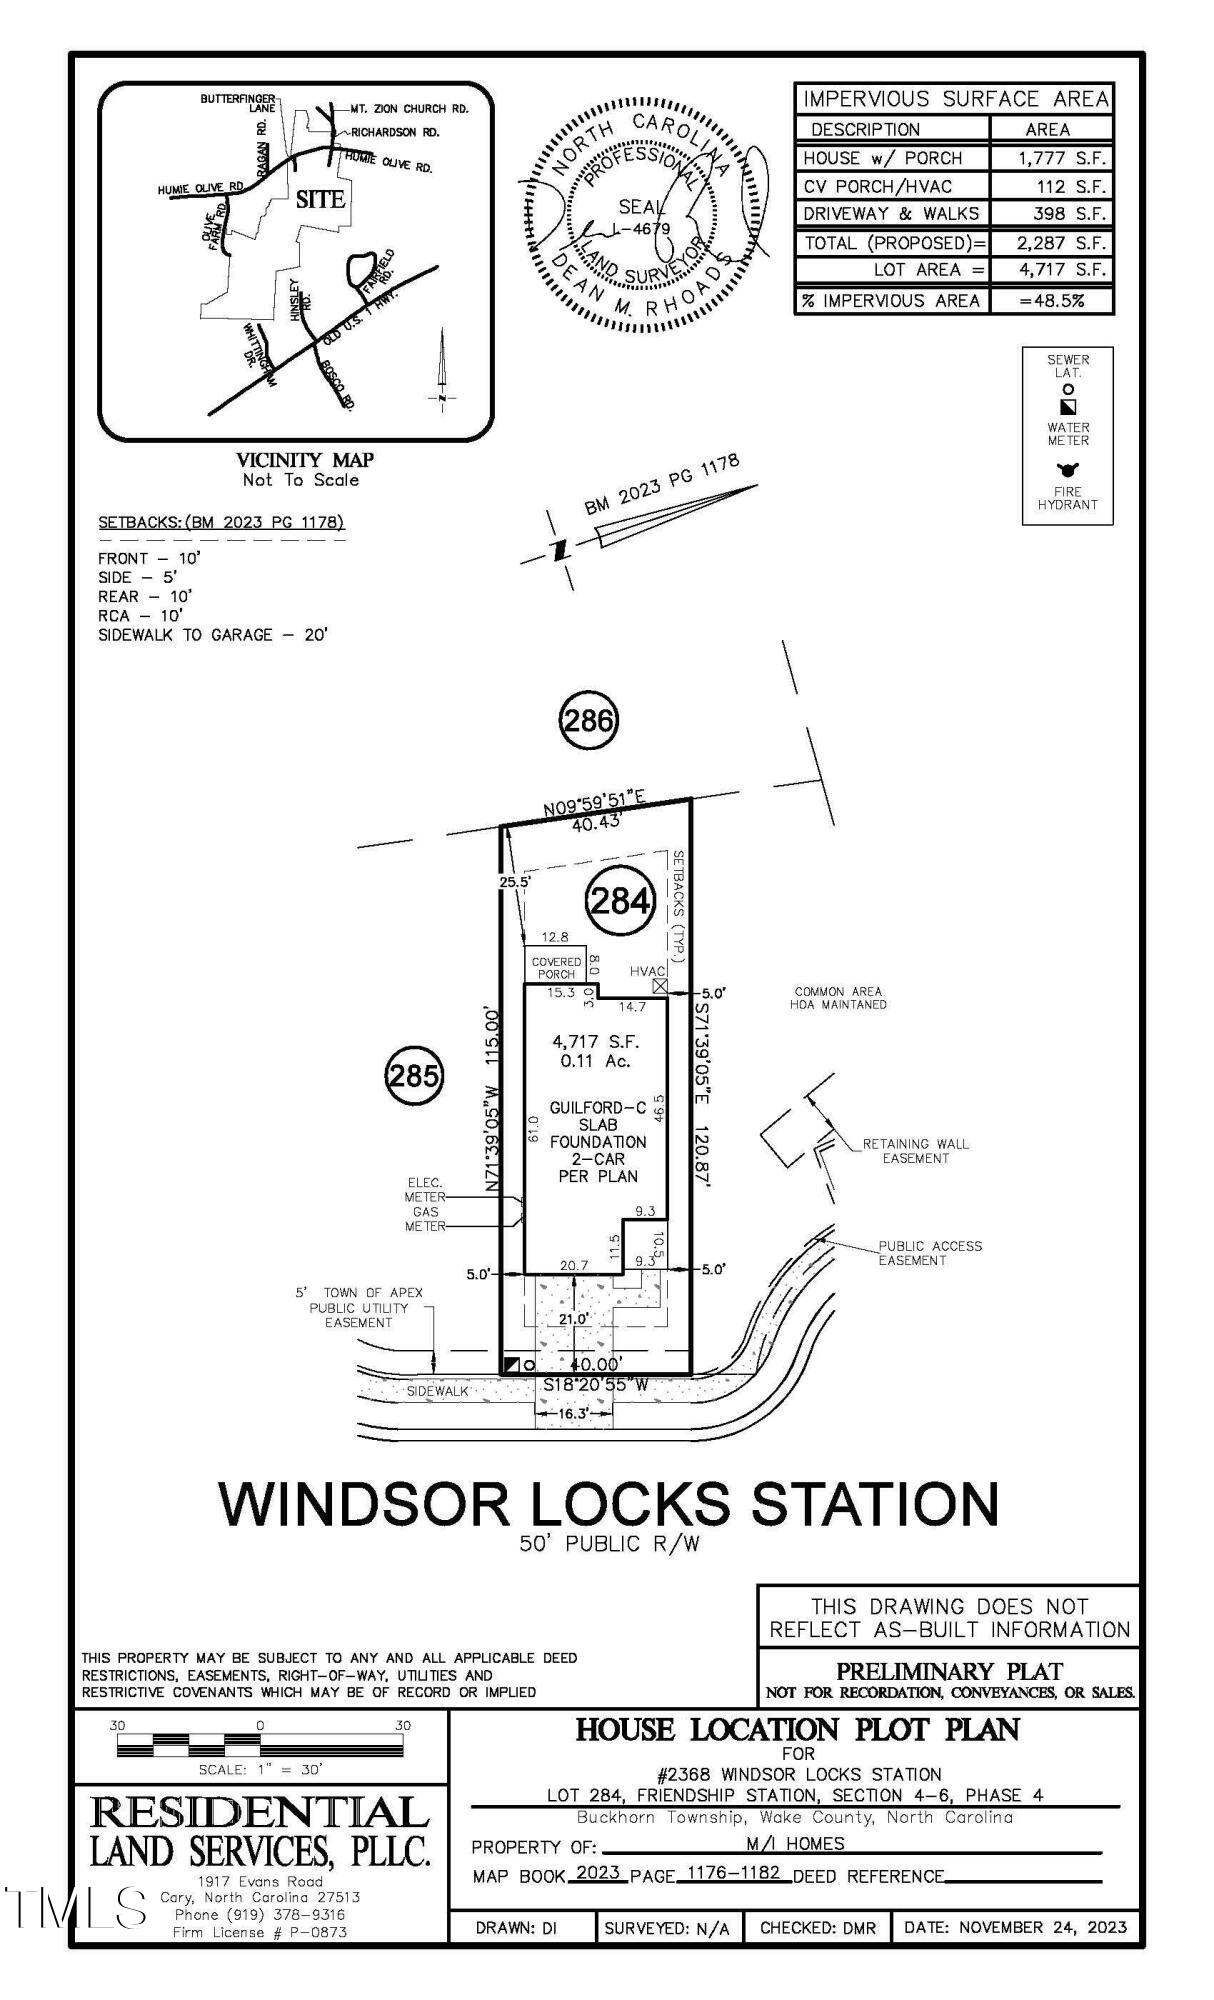 Photo 4 of 14 of 2368 Windsor Locks Station Lot 284 house